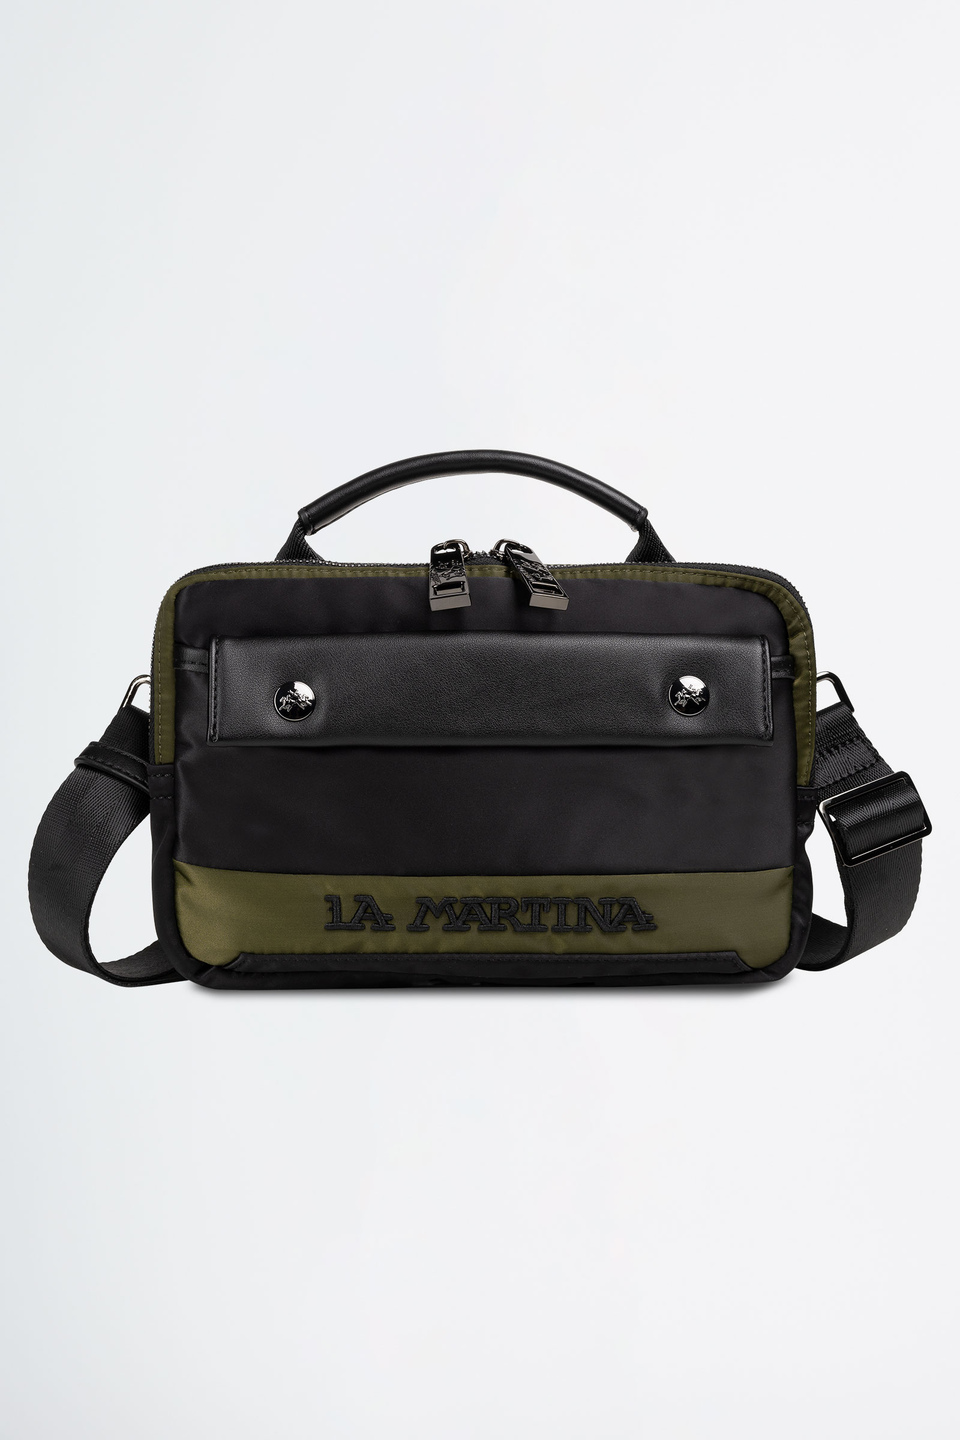 Shoulder bag in fabric | La Martina - Official Online Shop